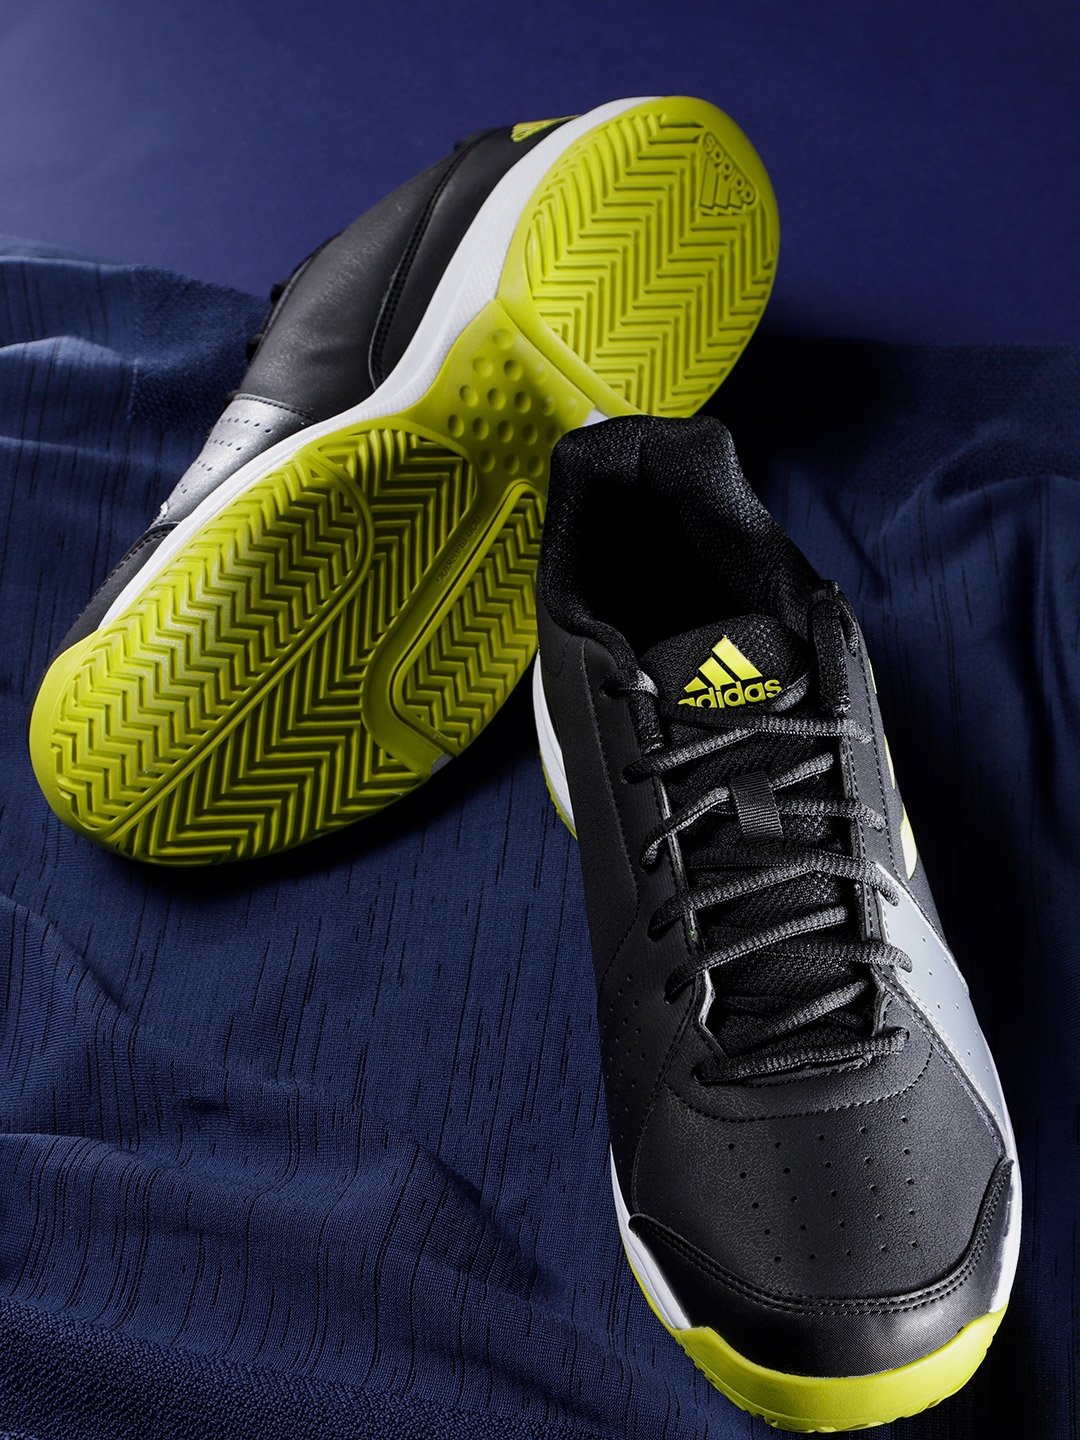 adidas approach 2 tennis shoe mens